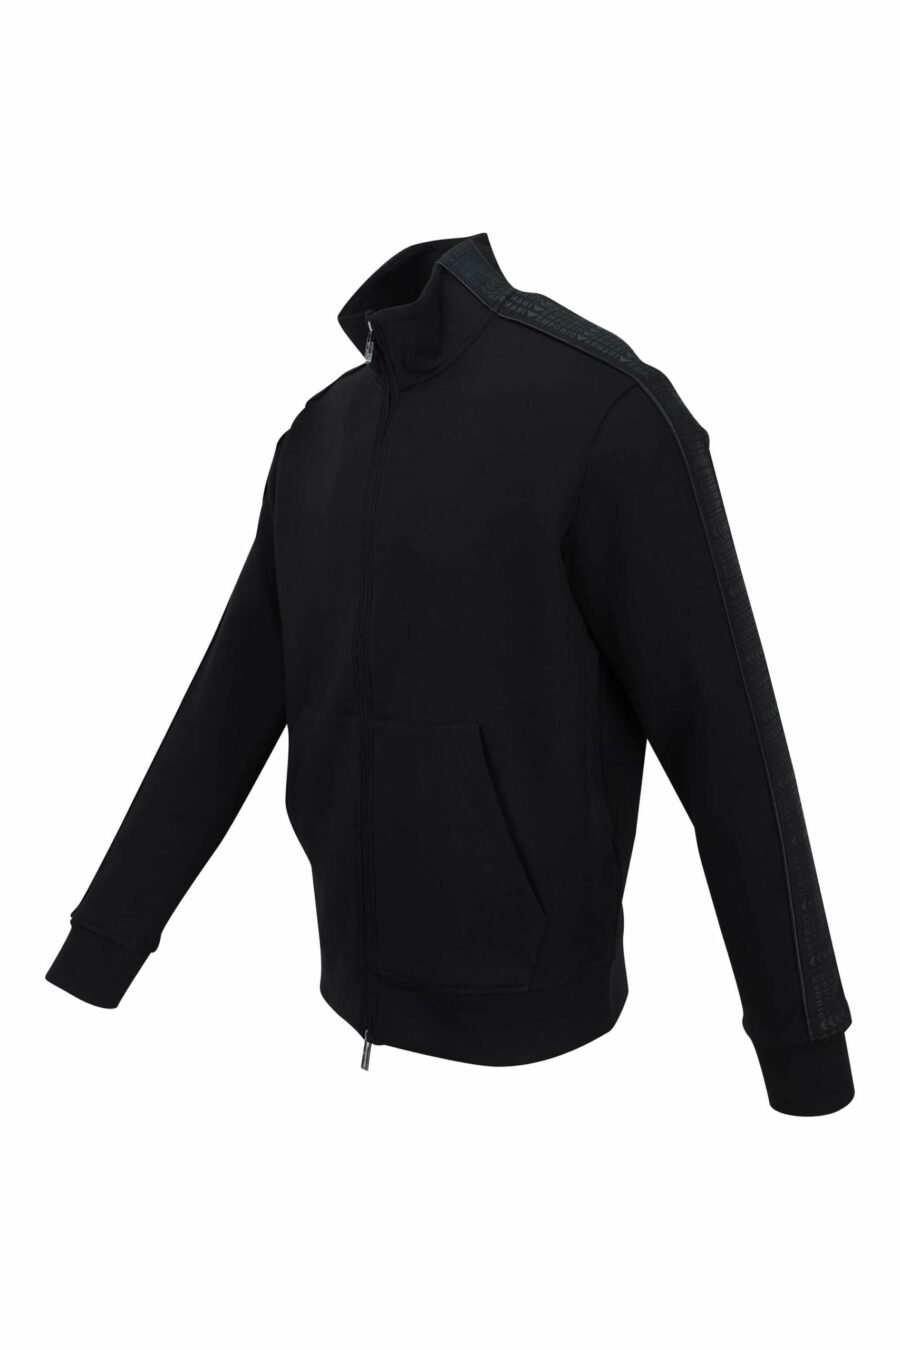 Black turtleneck sweatshirt with side stripes and mini logo - 8057767454784 1 scaled